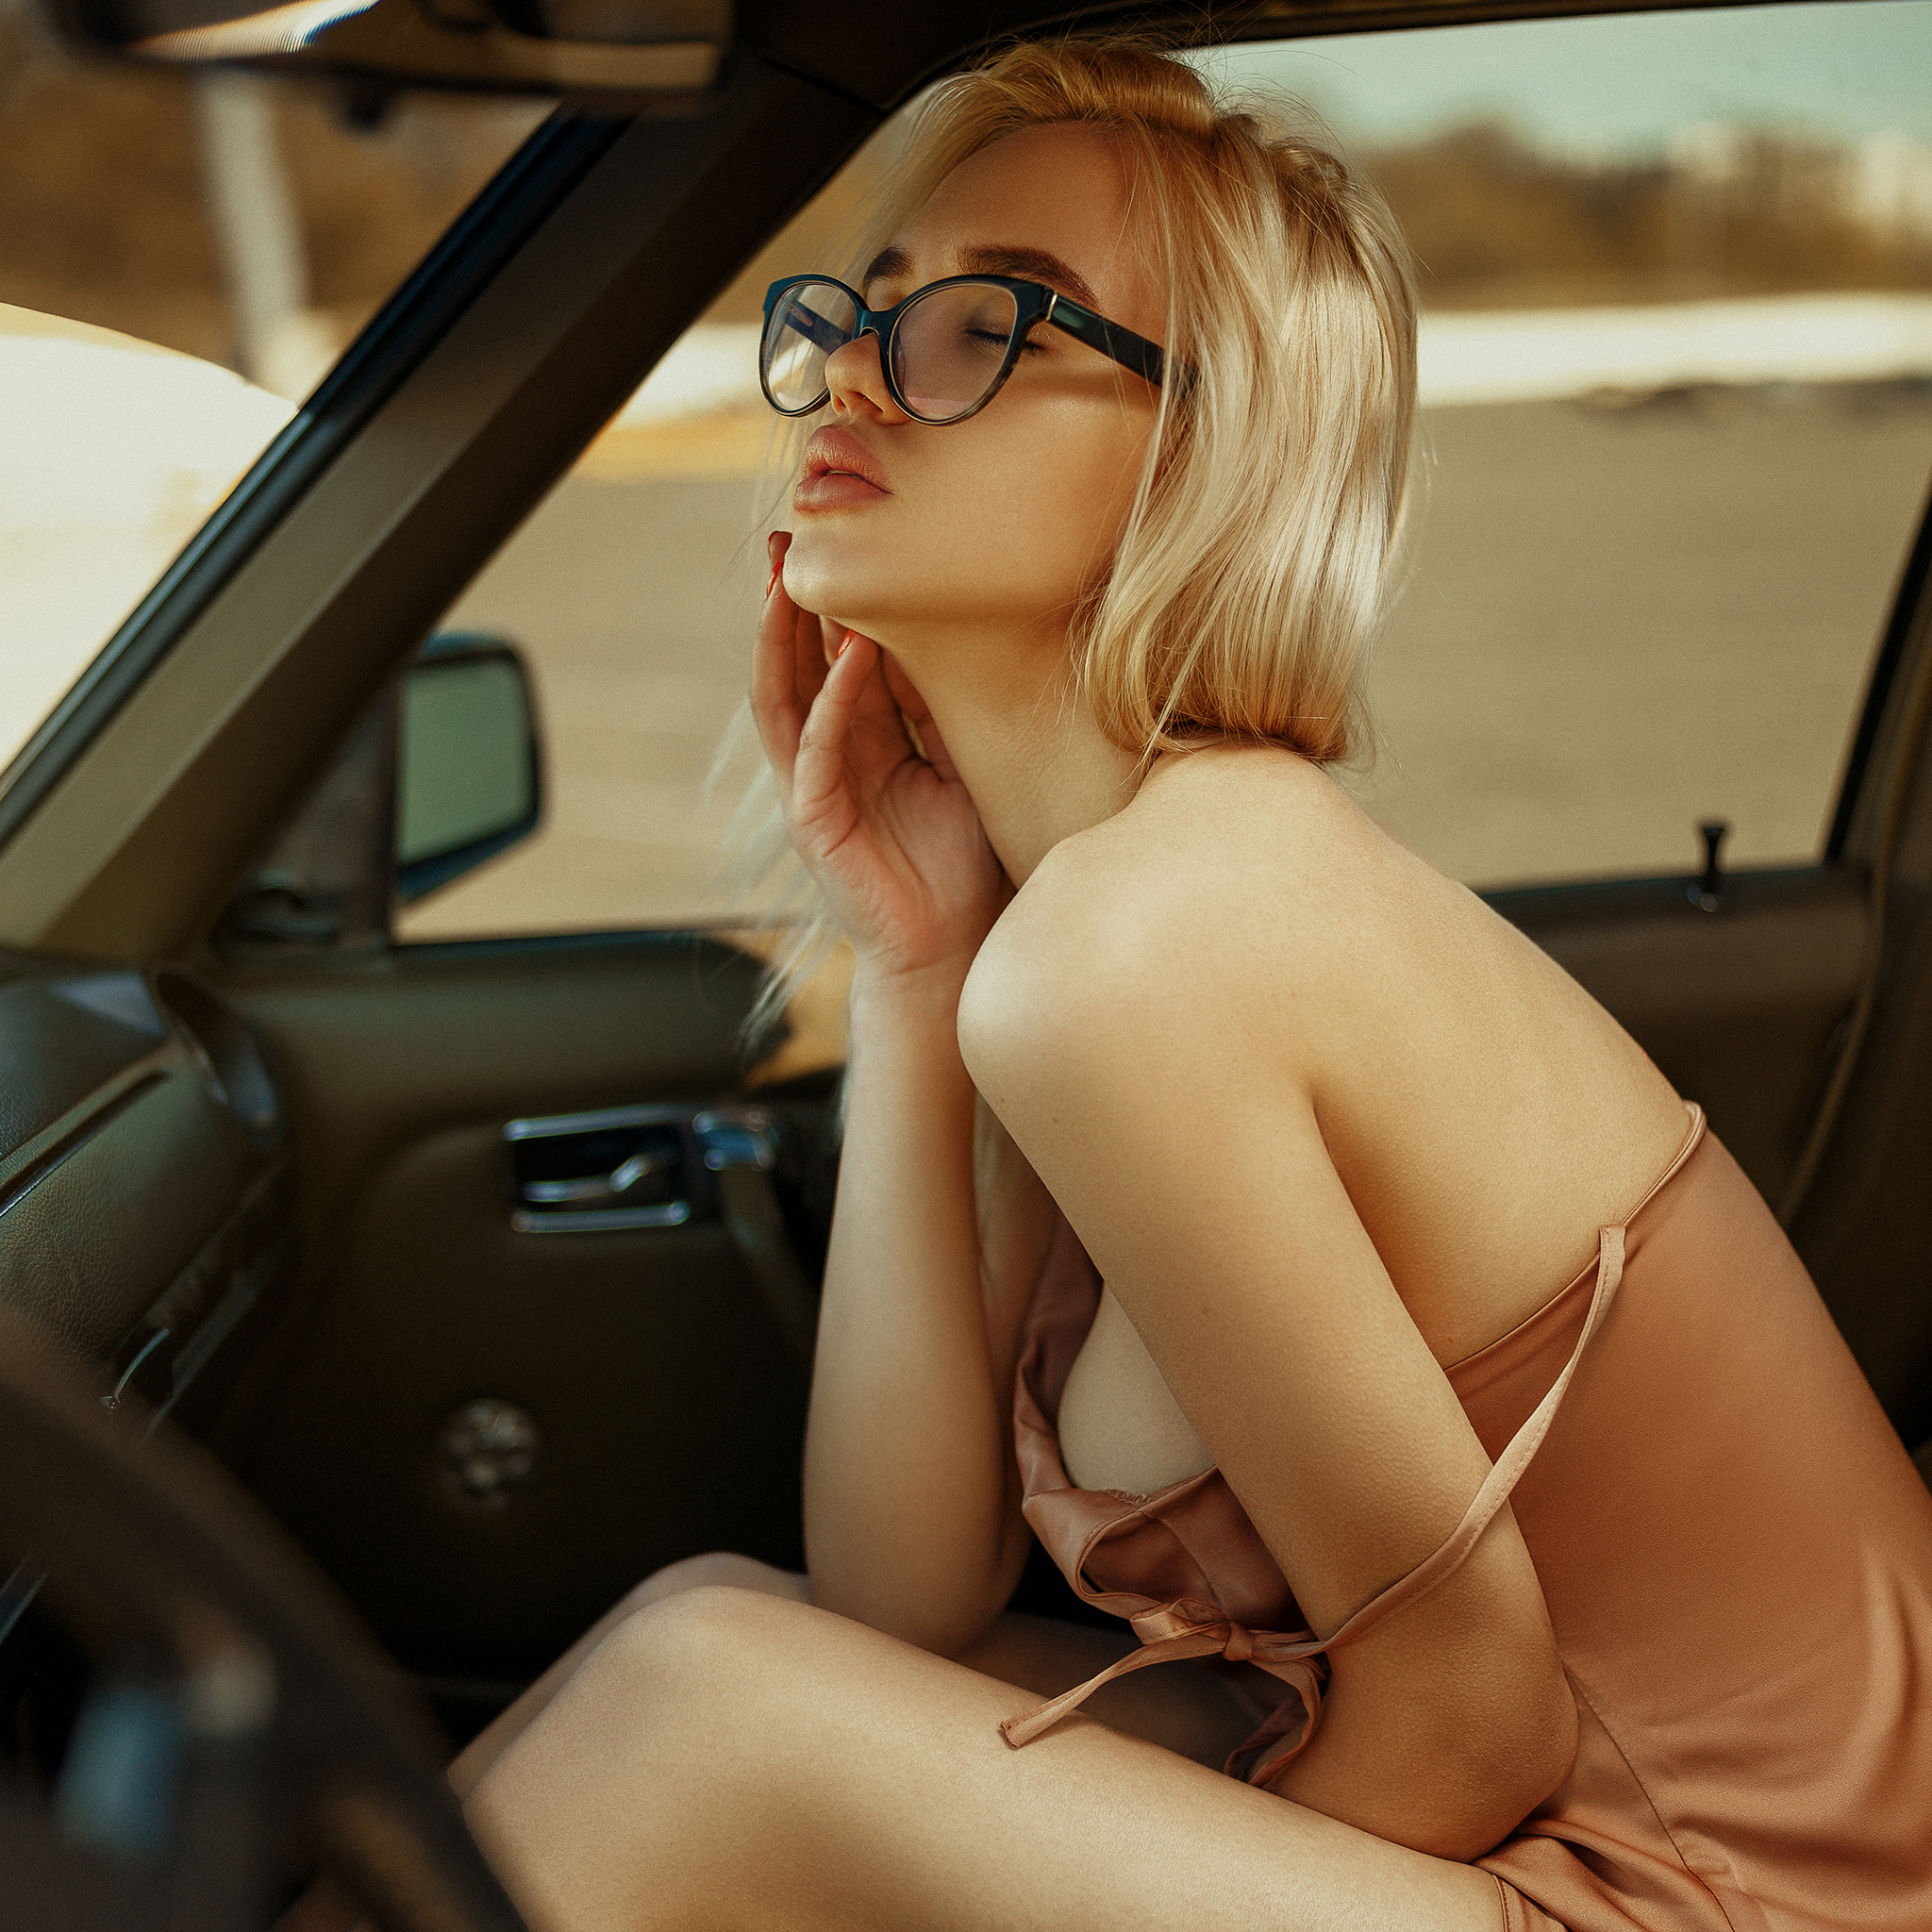 People 2048x2048 Ivan Kovalyov women blonde glasses juicy lips car interior Maria Kharchenko